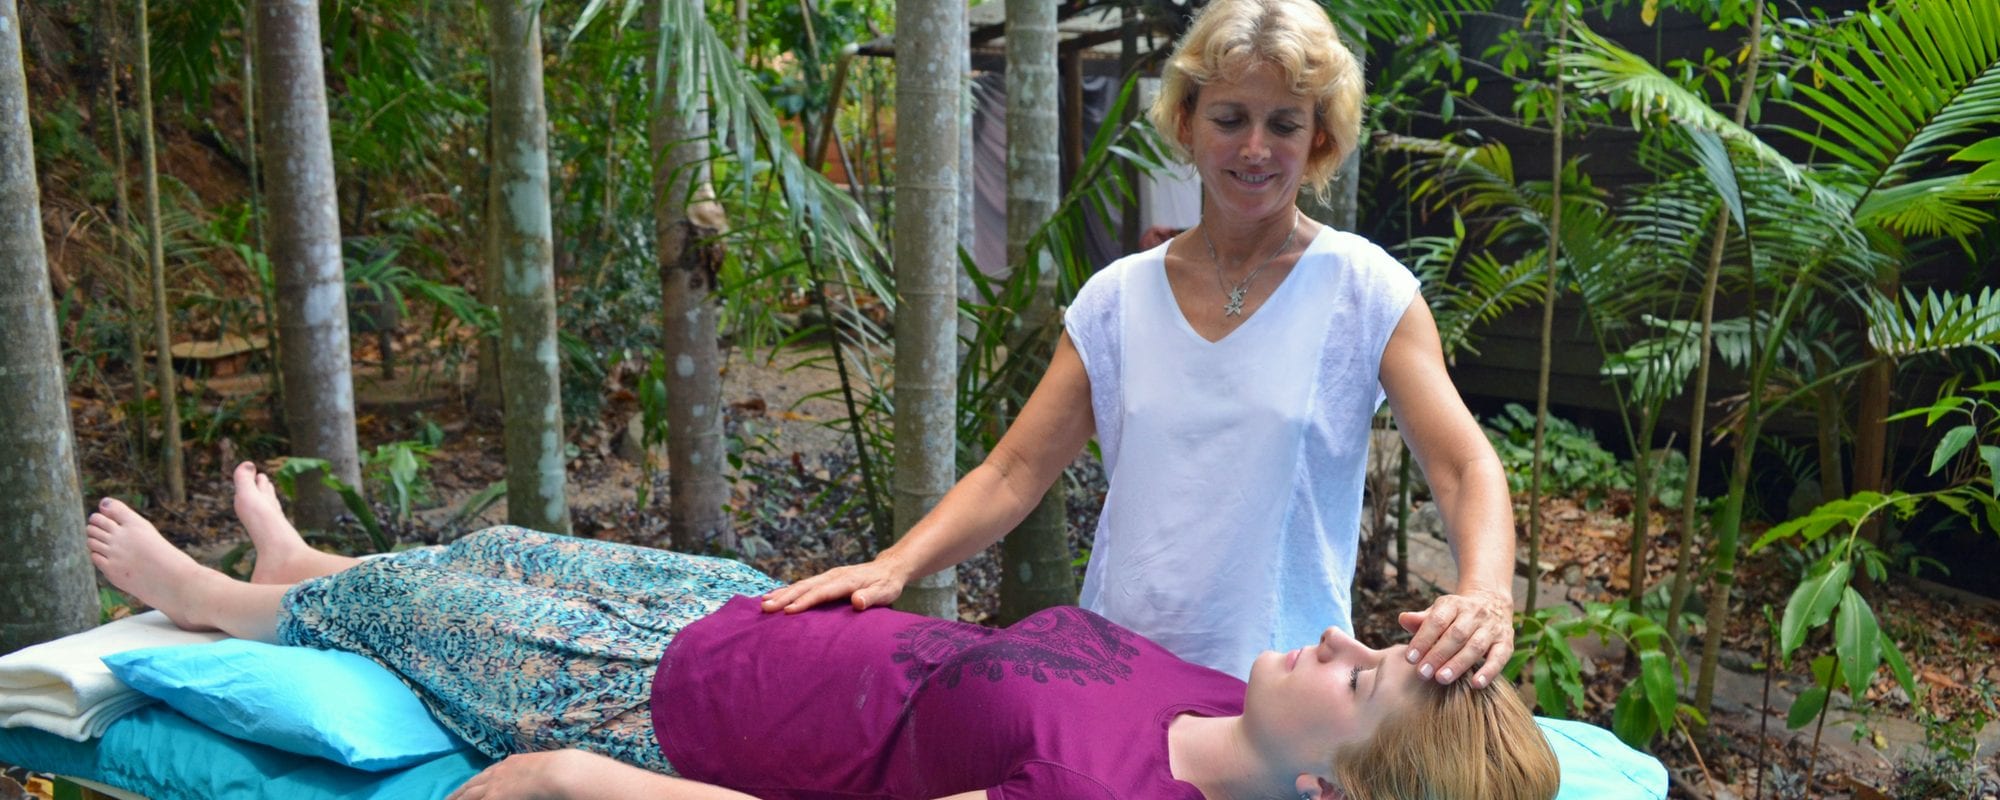 Cairns reiki teacher Julie Heskins demonstrates a reiki treatment